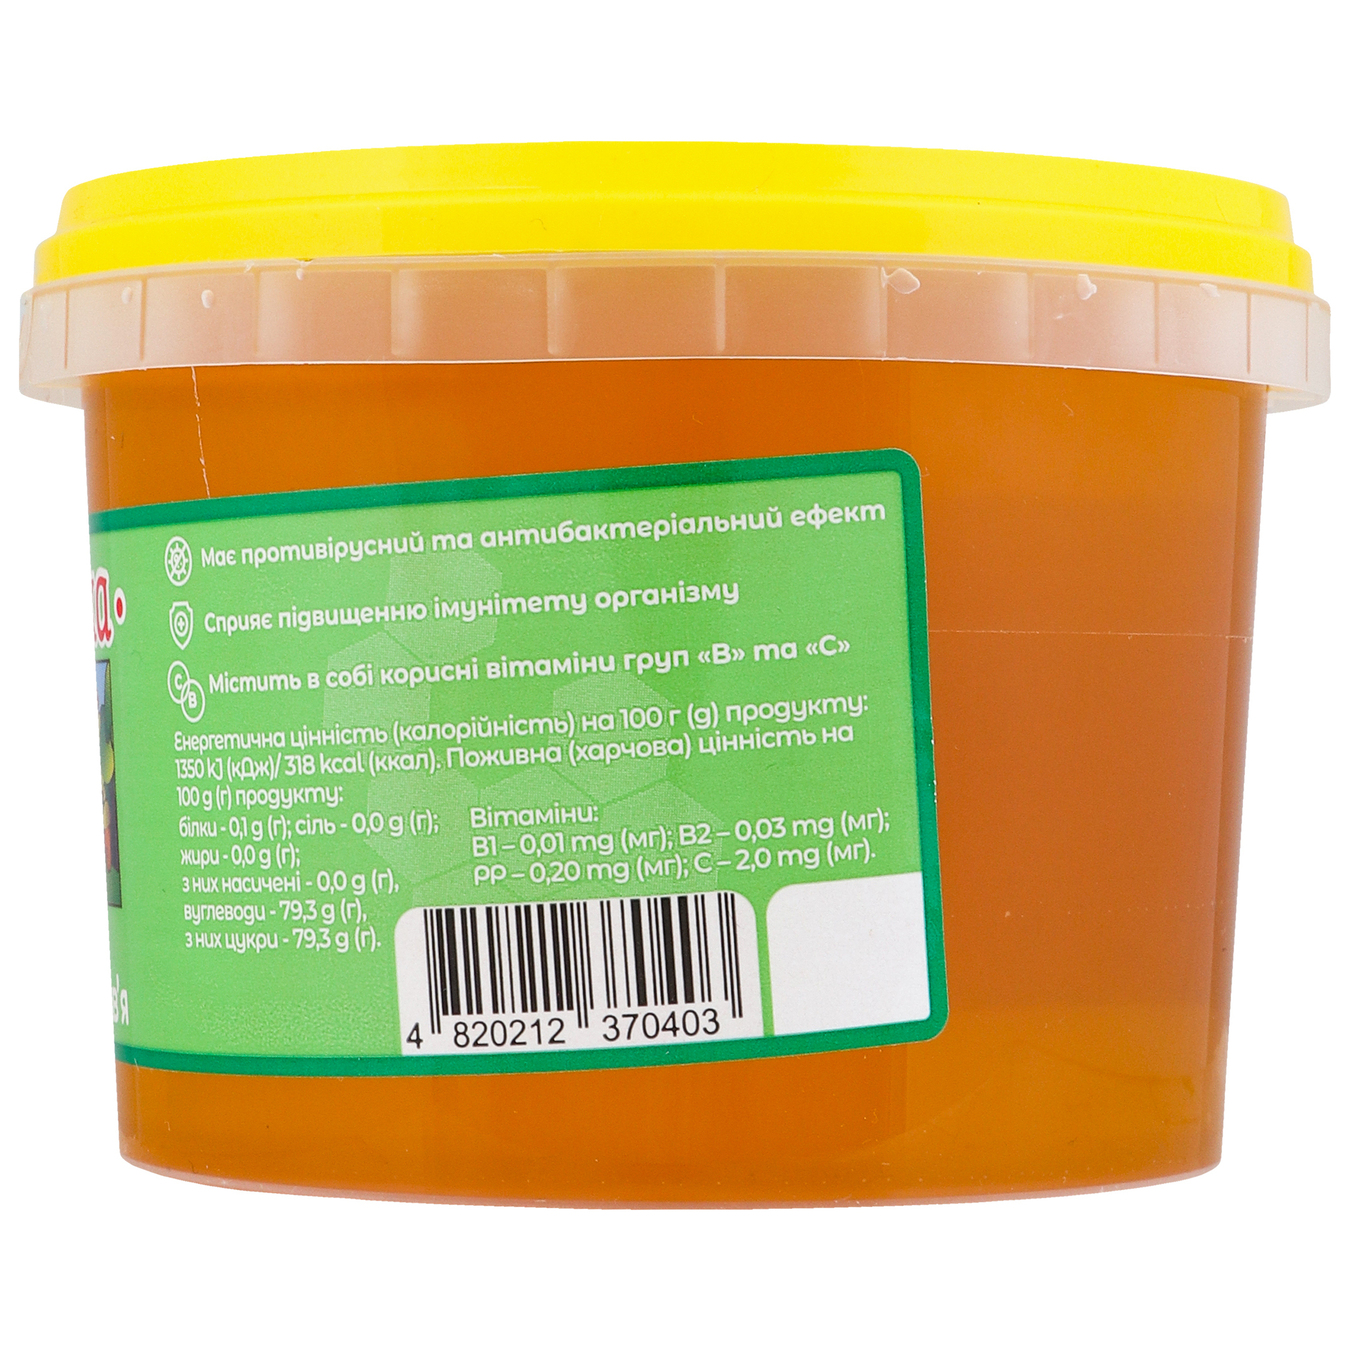 Natural multi-herb honey Apiary bucket 500g 2